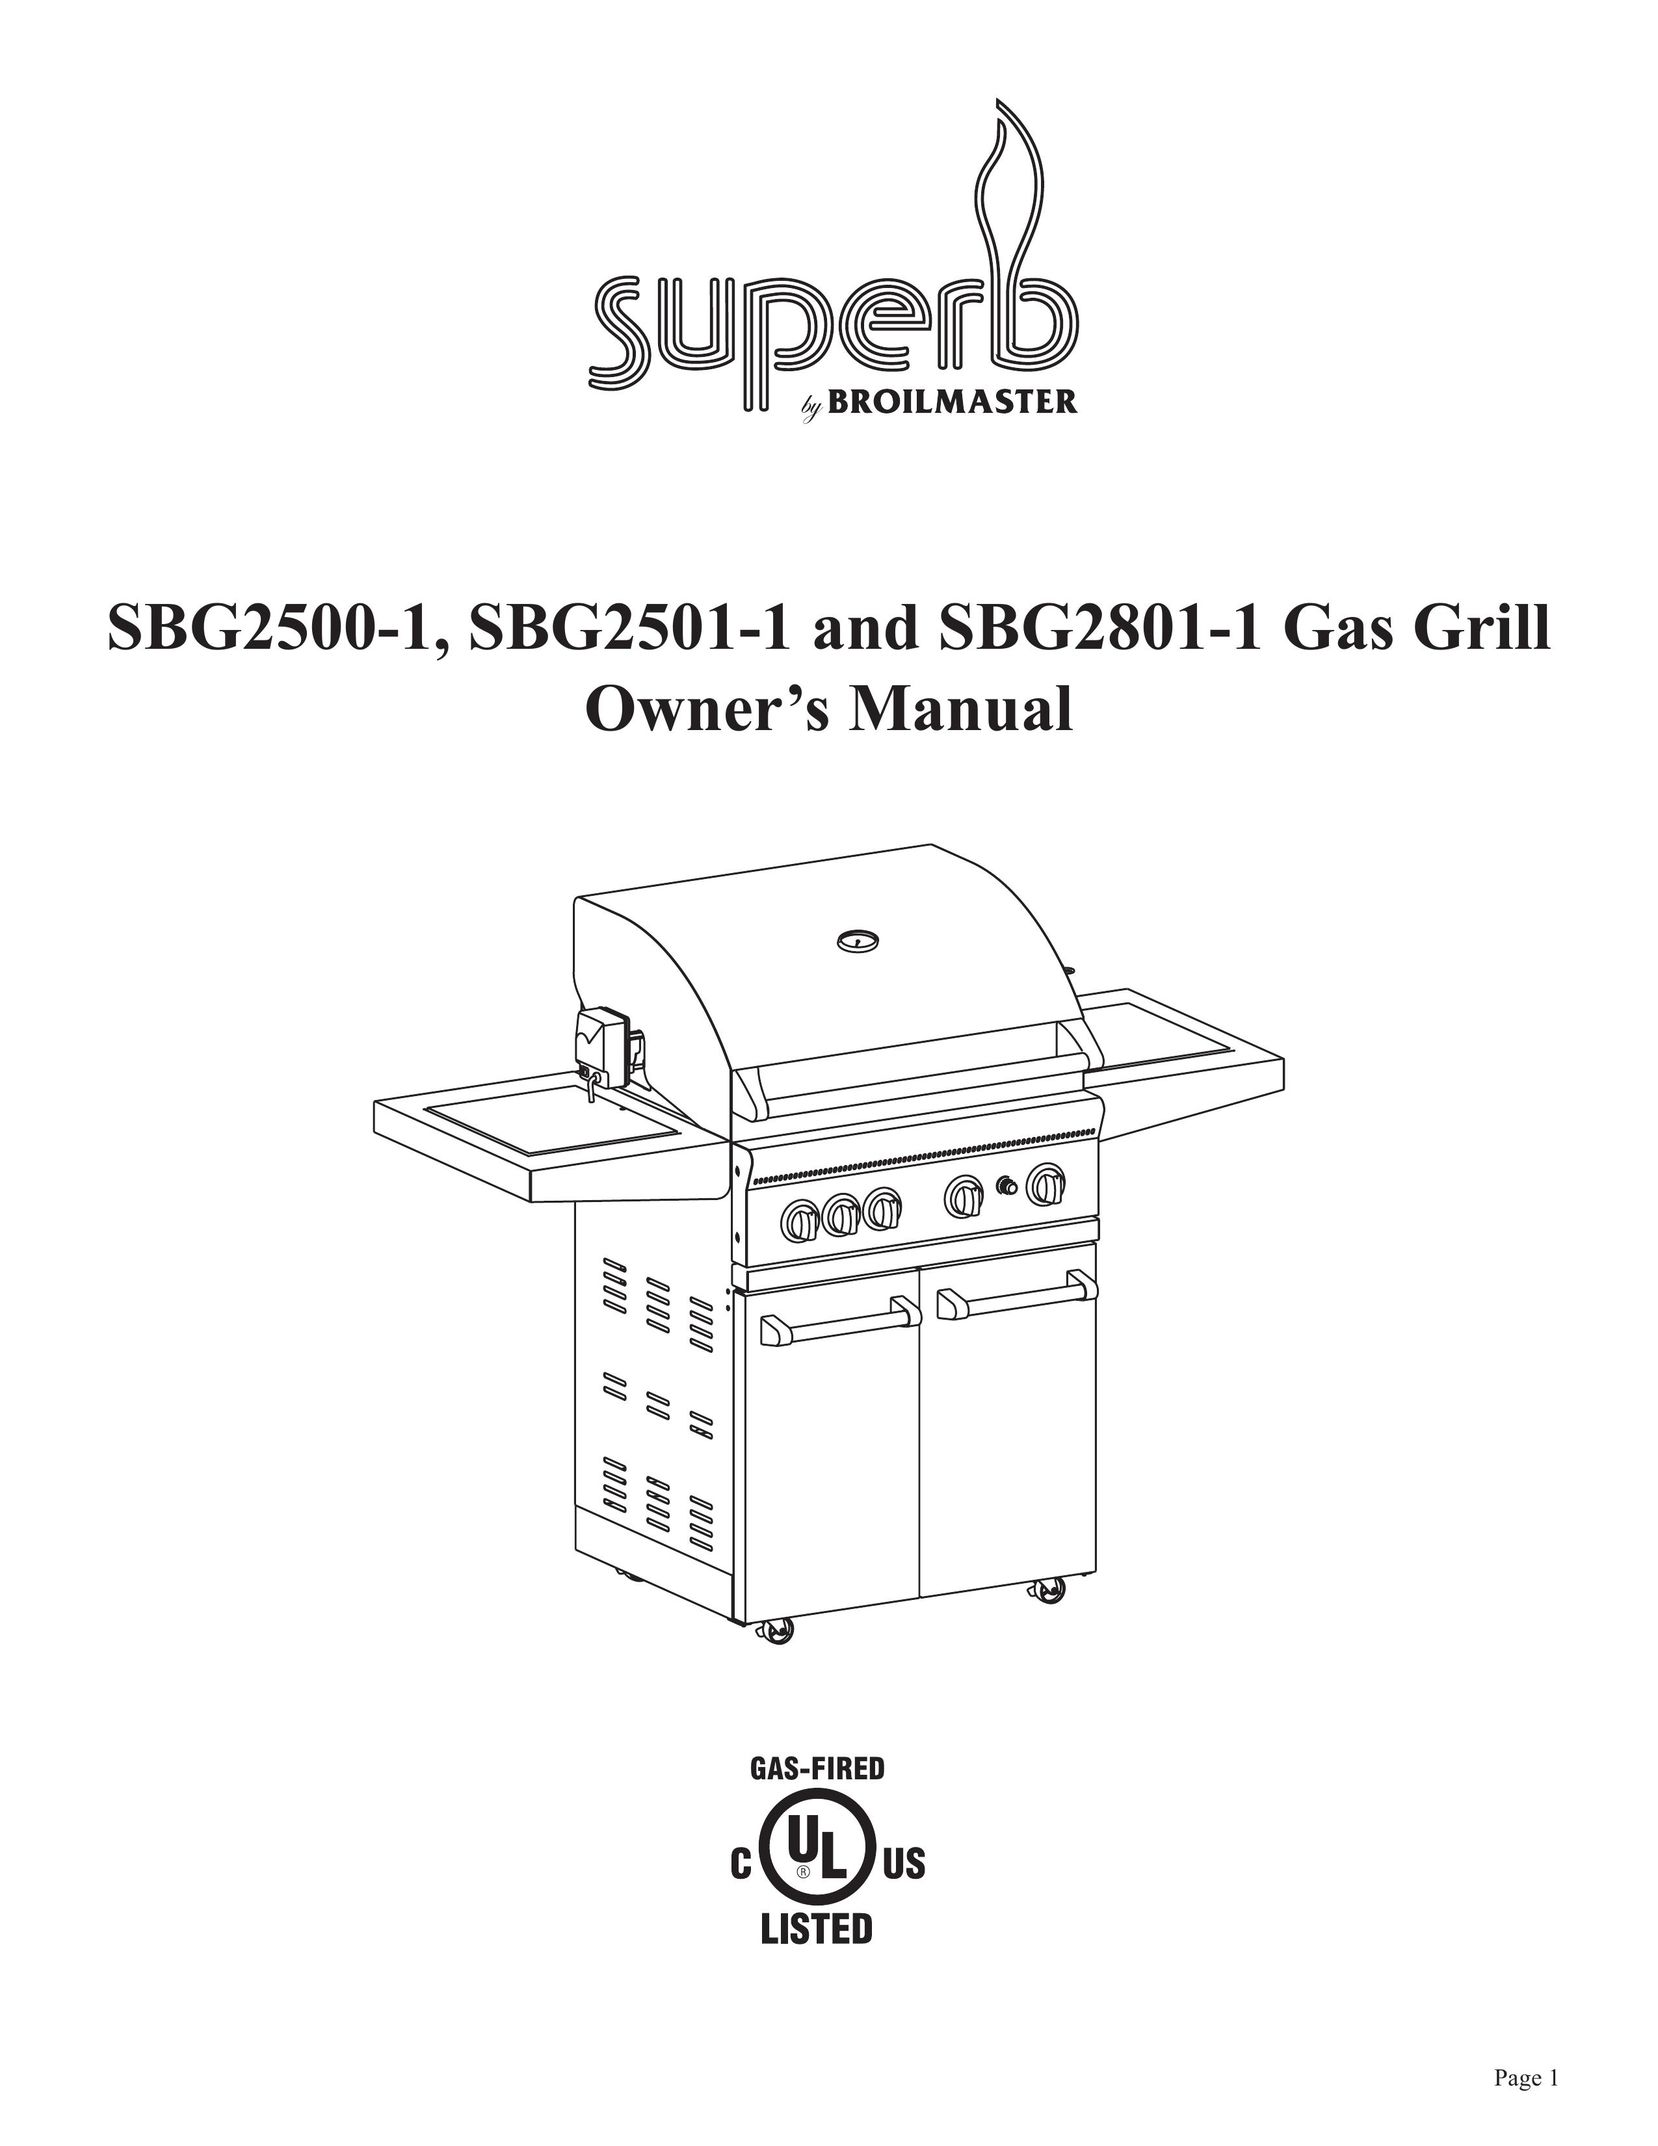 Broilmaster SBG2801-1 Kitchen Grill User Manual